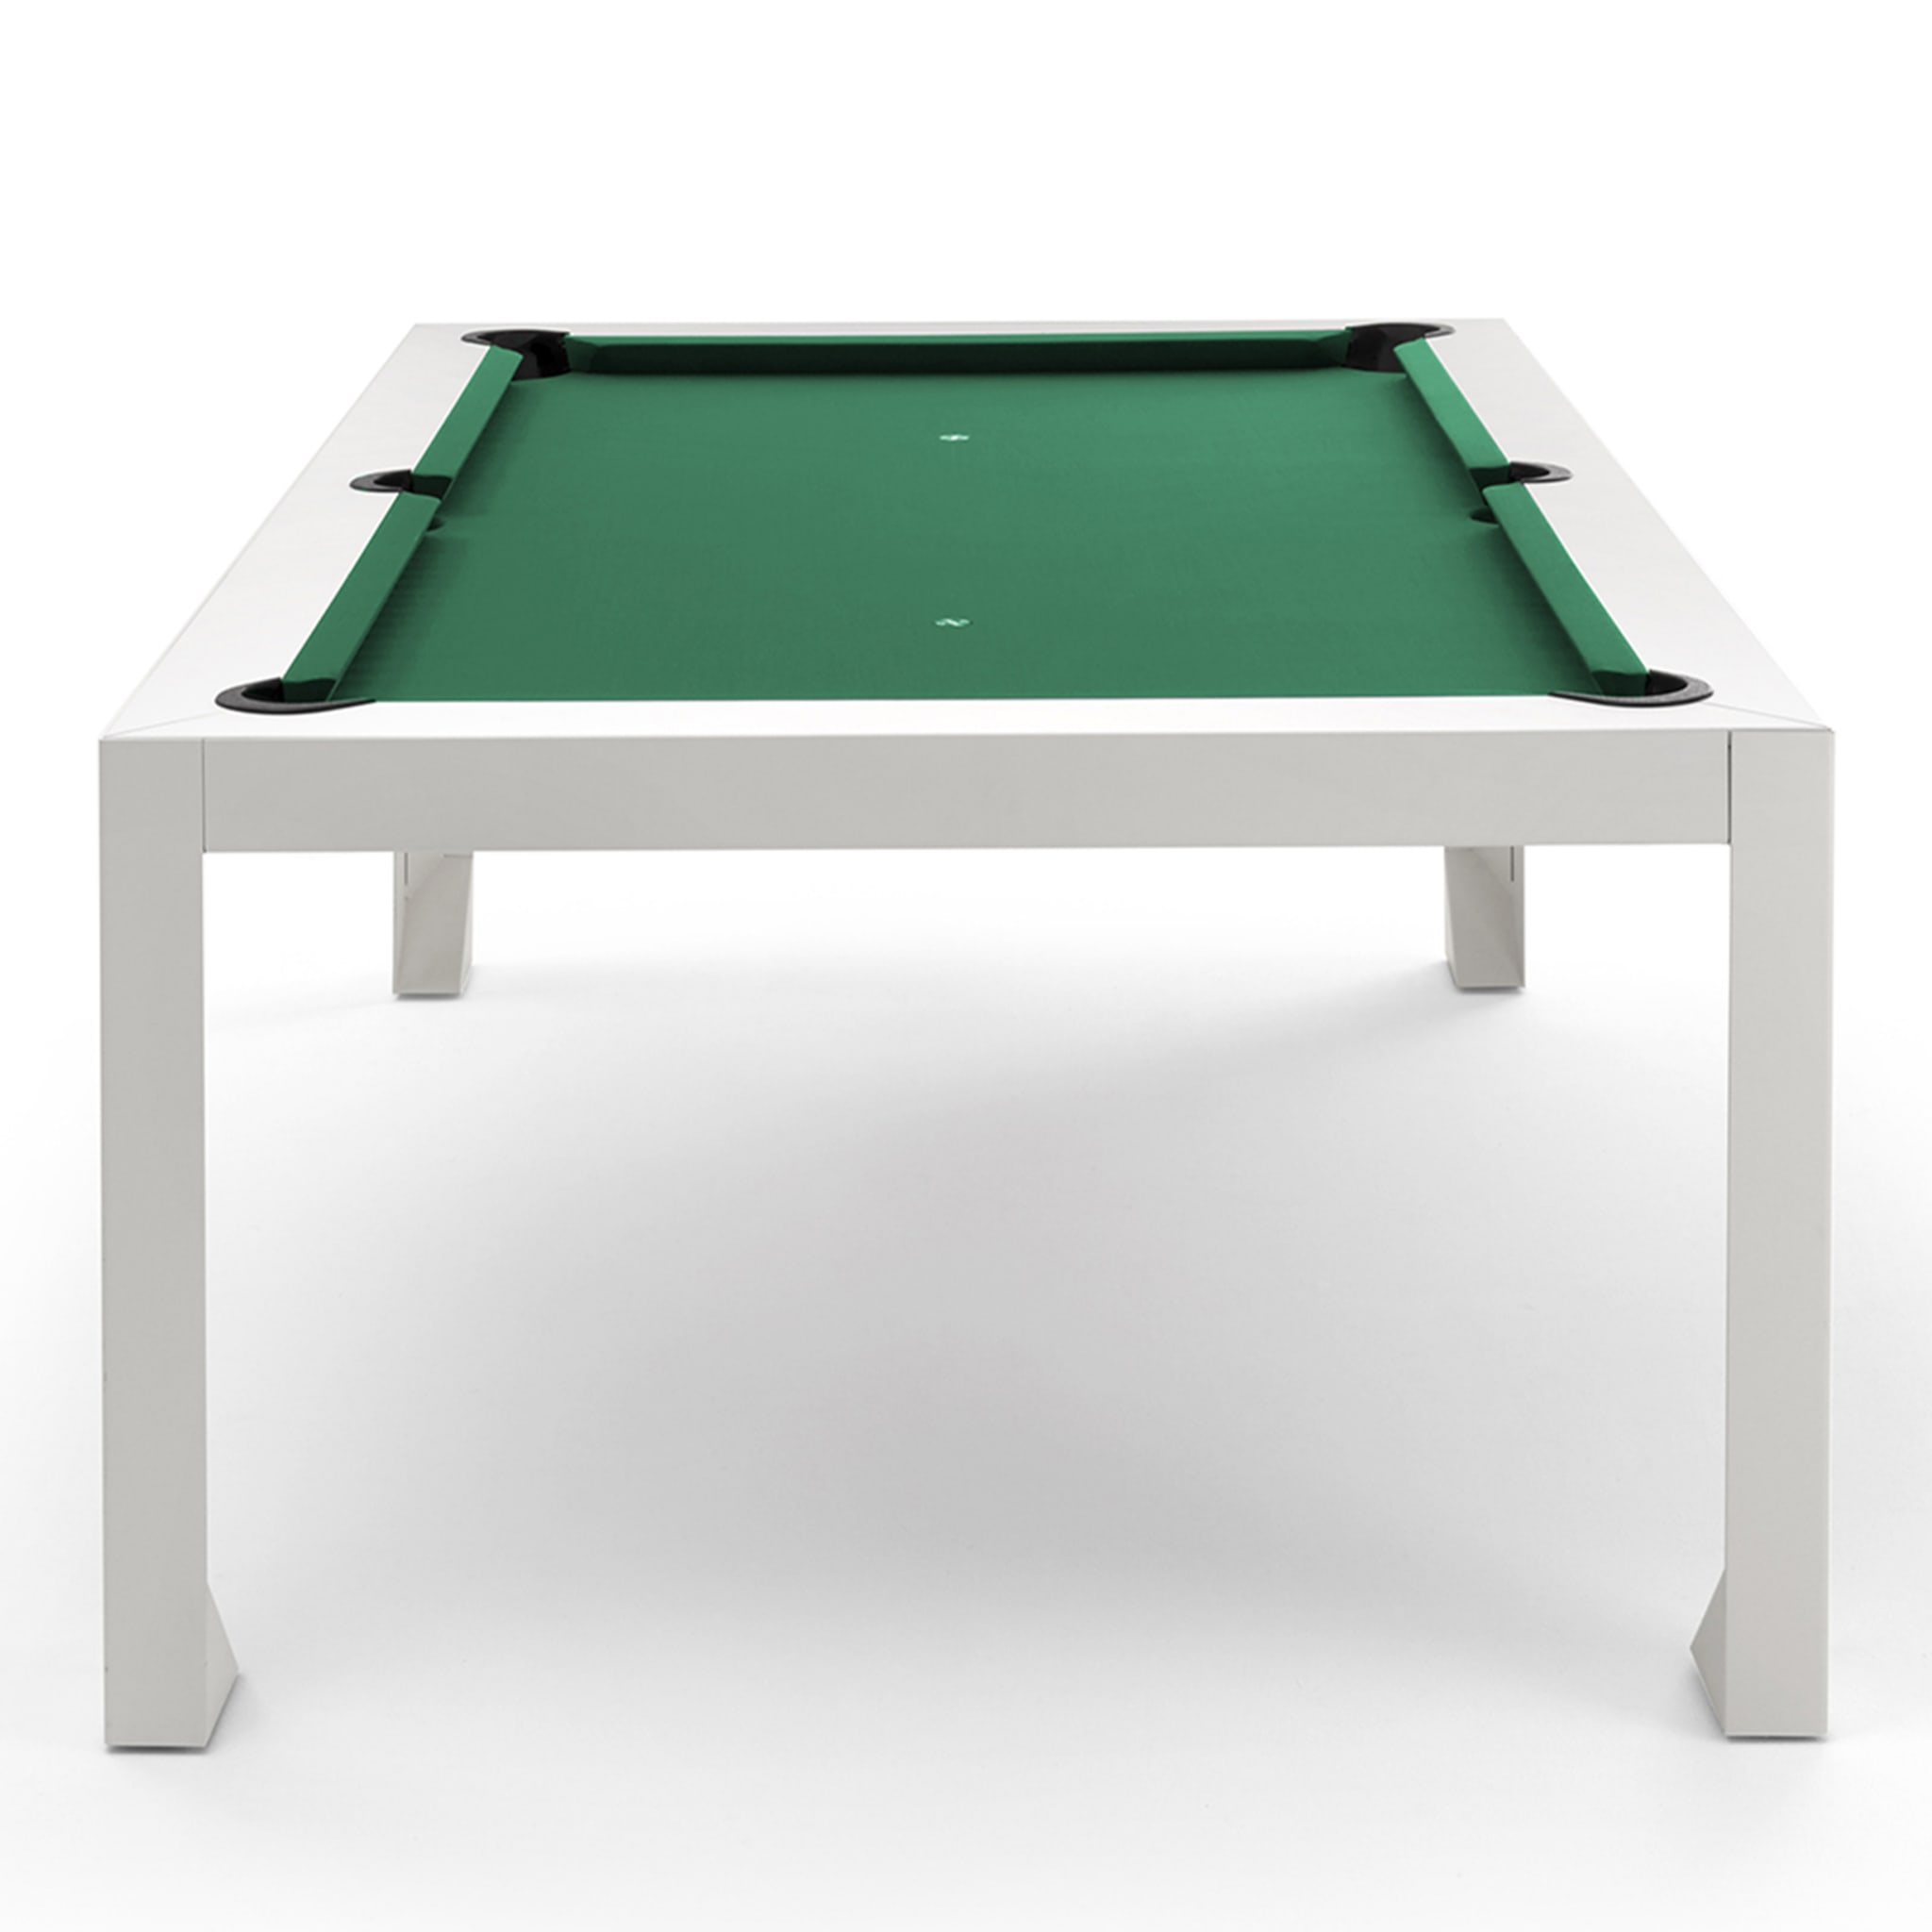 Carambola Cubista 7' White Pool Table by Basaglia + Rota Nodari - Alternative view 2